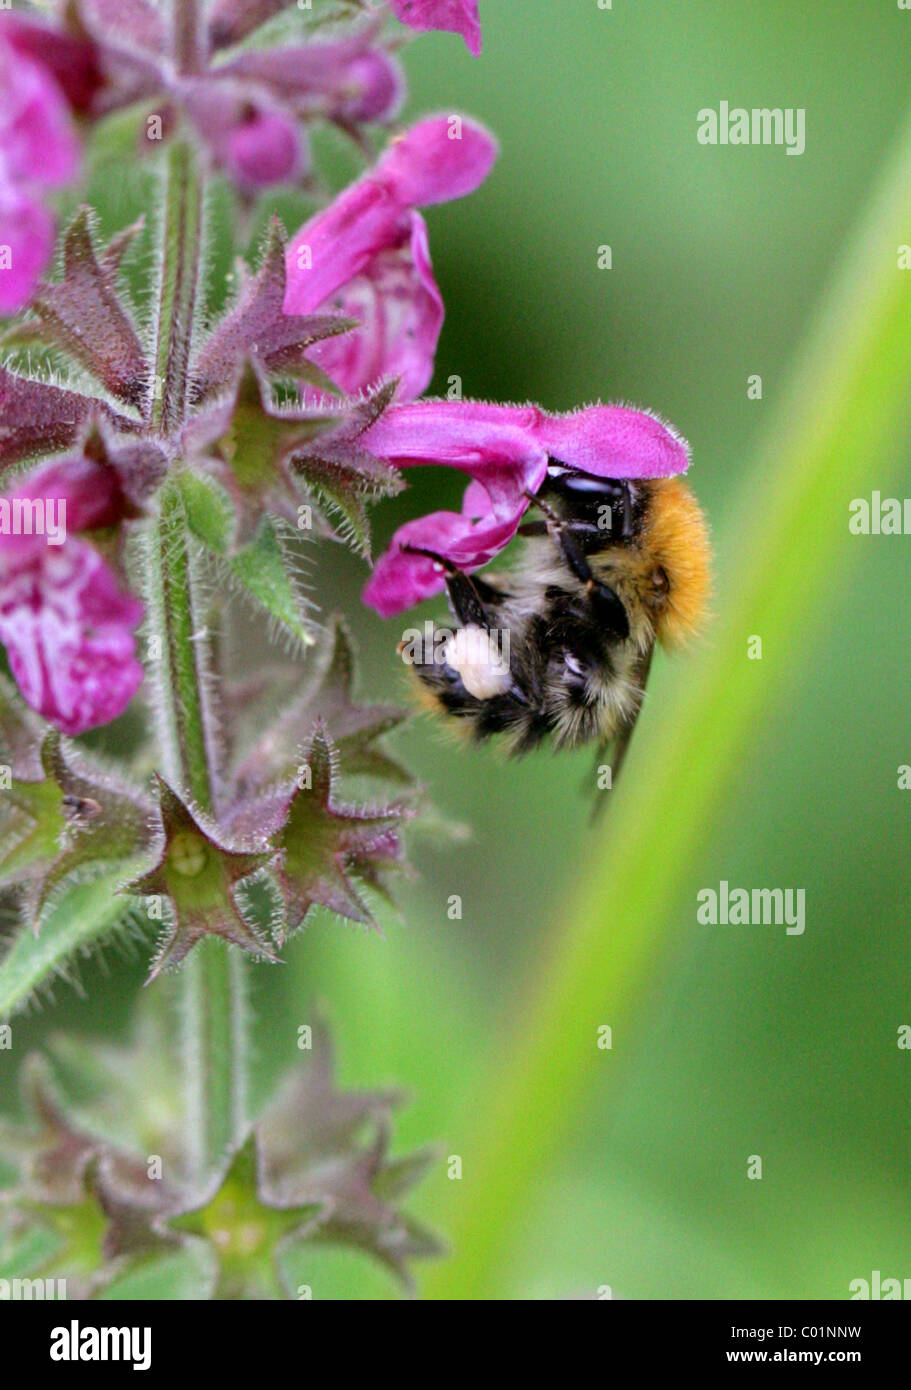 Common Carder Bumblebee, Bombus pascuorum, Apidae, Apoidea, Apocrita, Hymenoptera Stock Photo